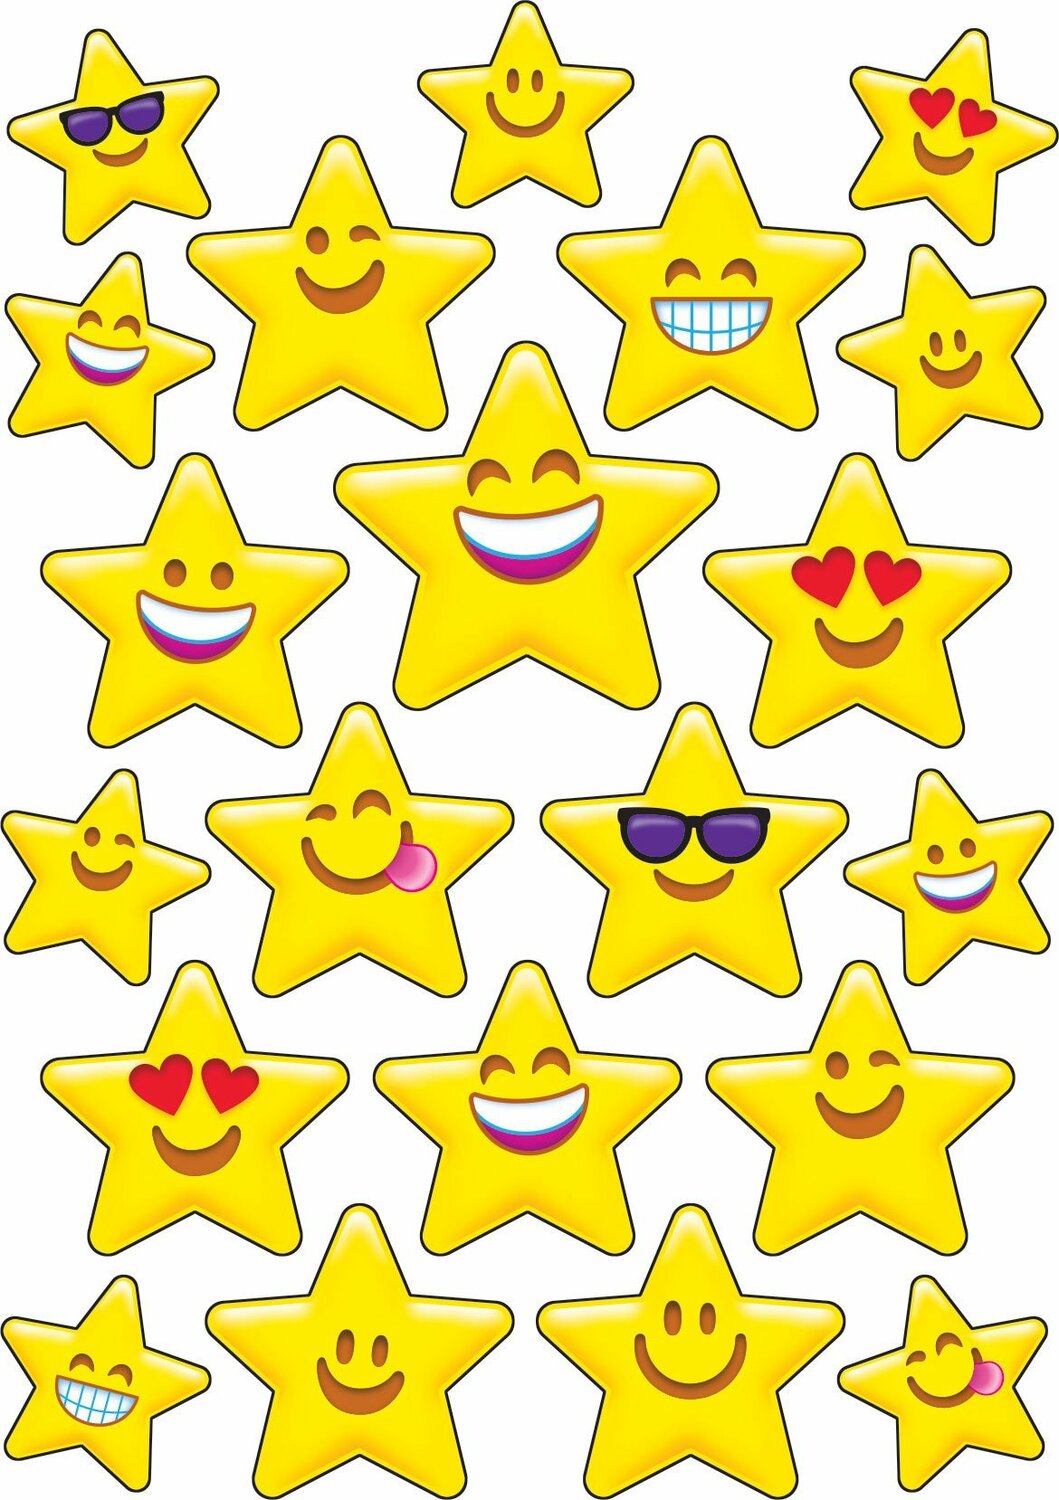 Emoji Stars/ Caramel Corn Stinky Stickers, Mixed Shapes, 84 Ct